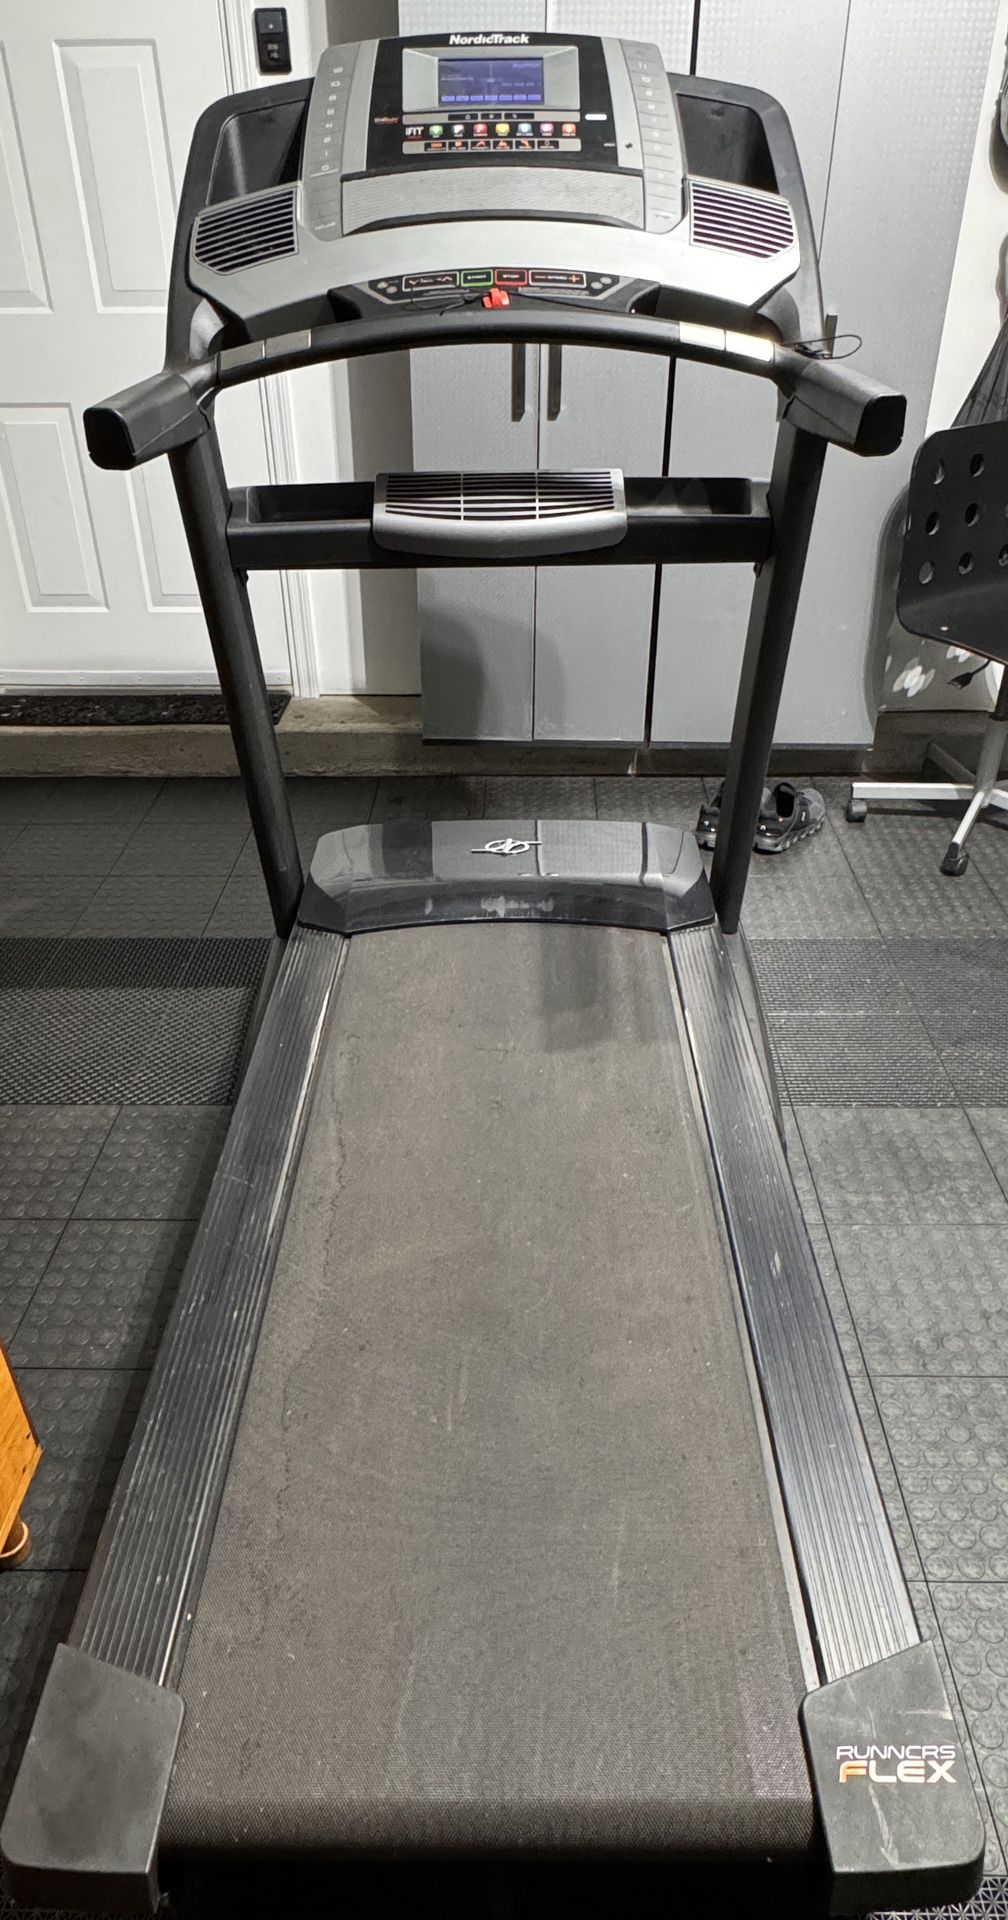 Nordictrack Commercial 1750 Treadmill